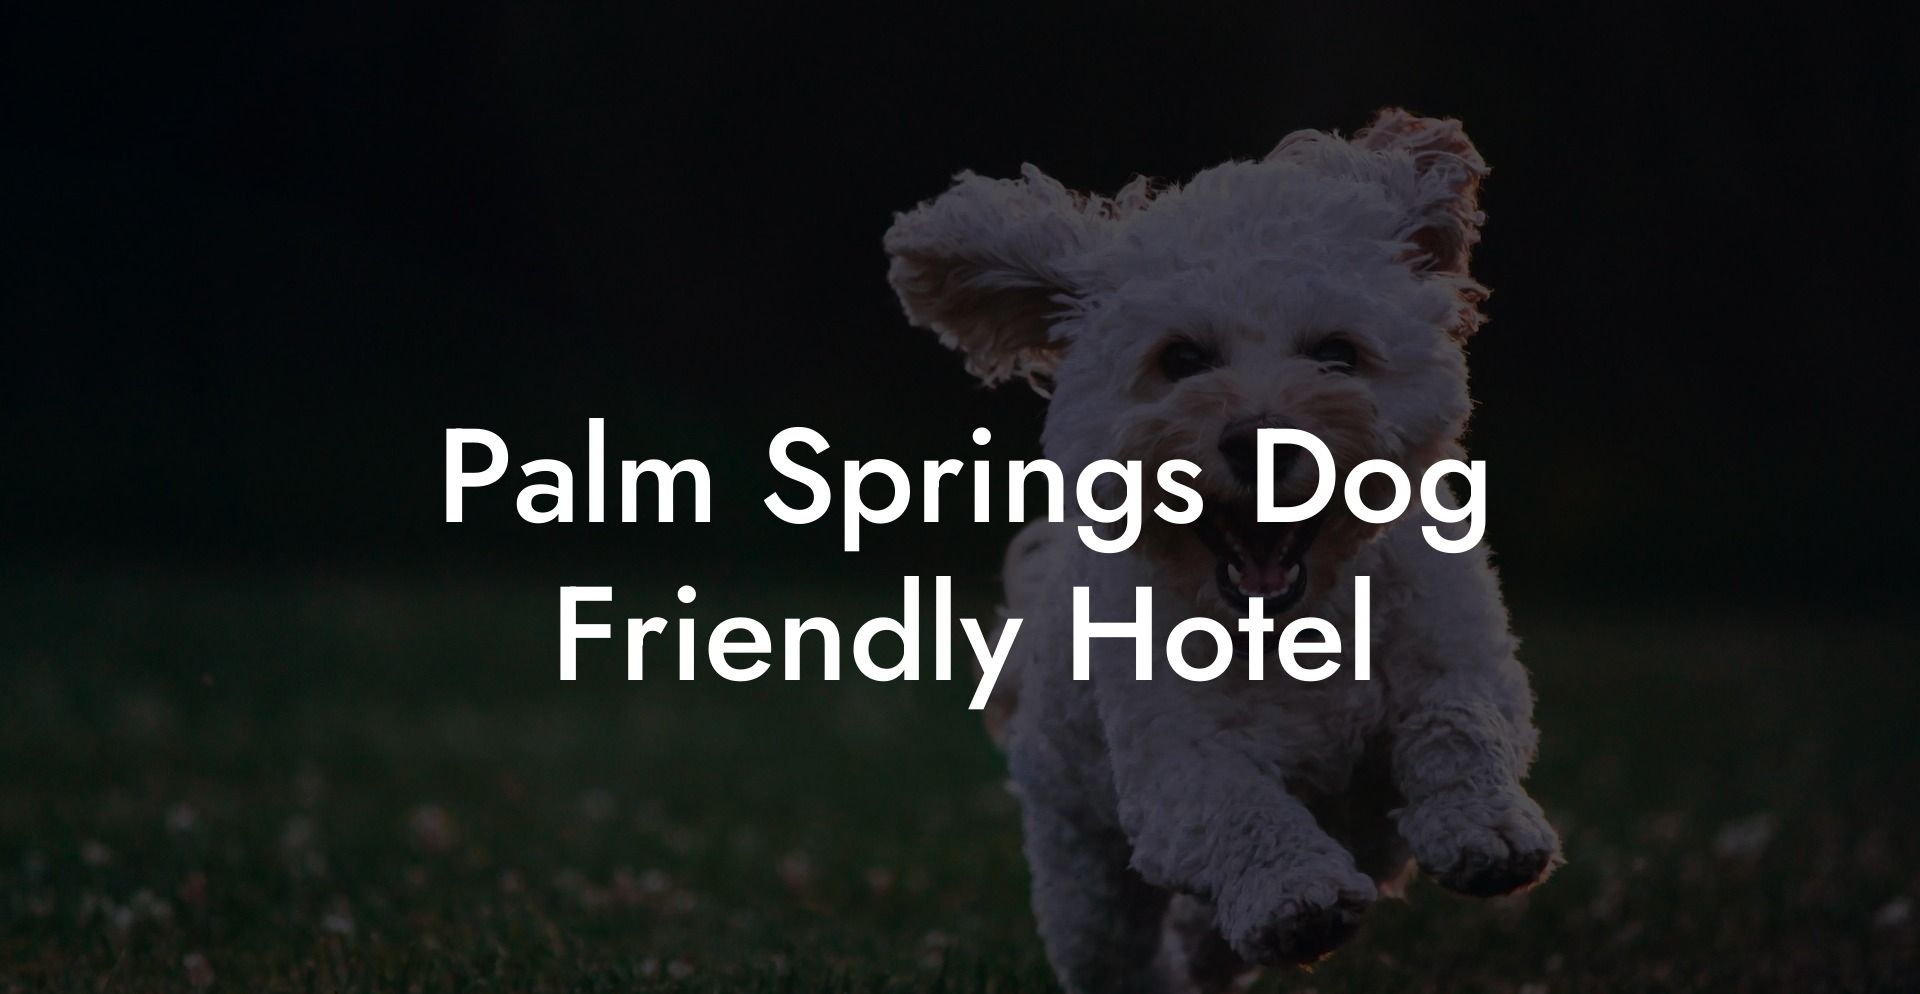 Palm Springs Dog Friendly Hotel